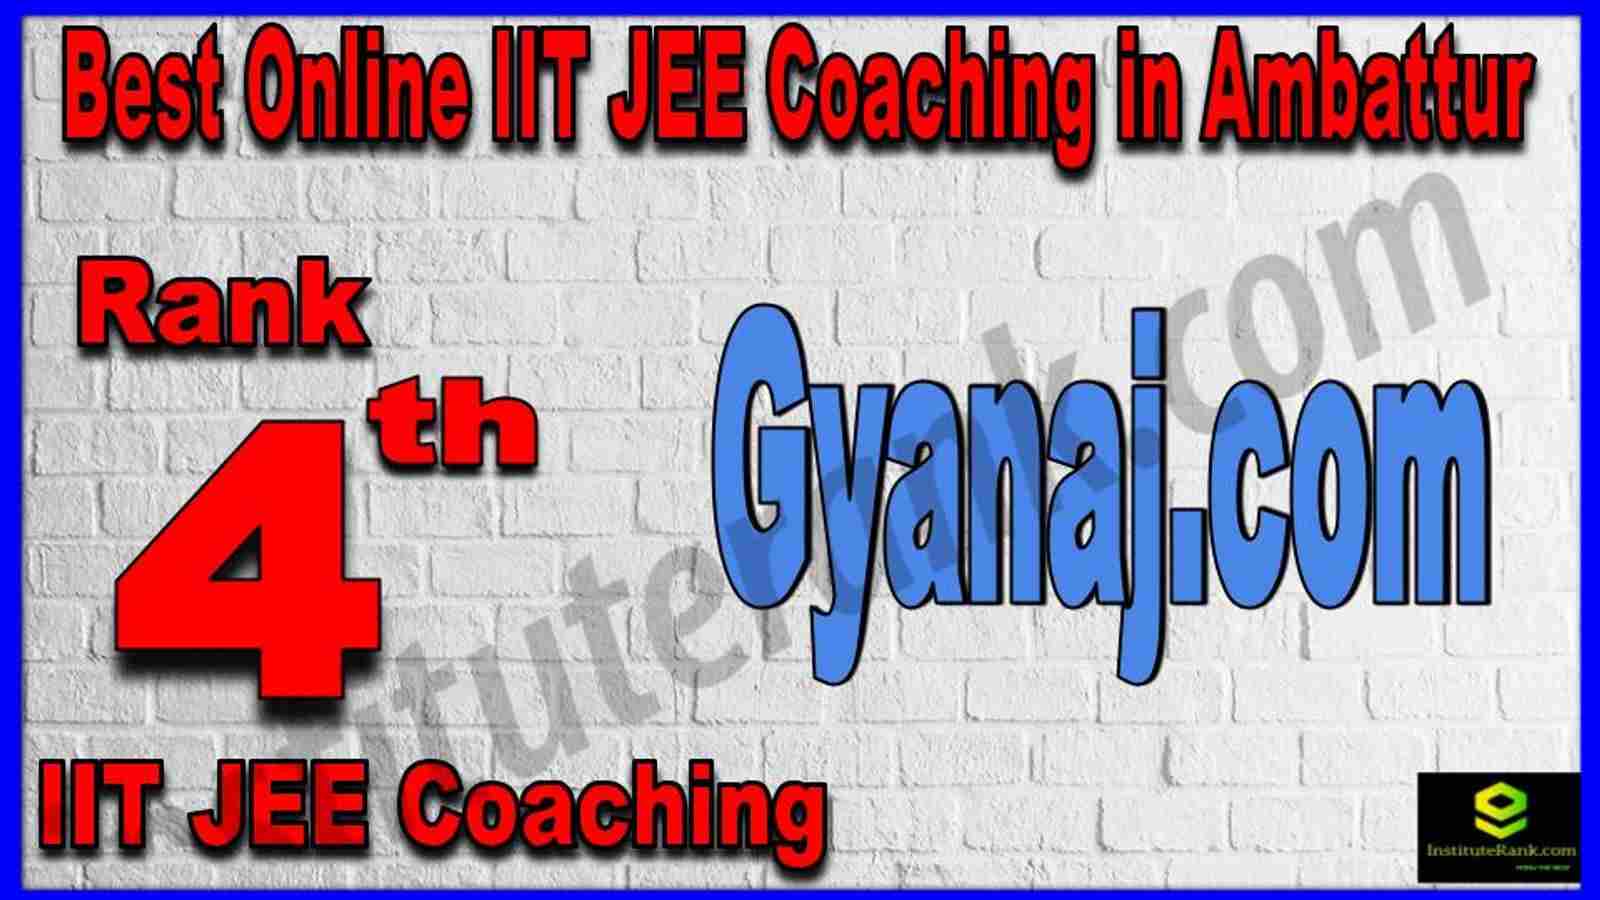 Rank 4th Best Online IIT-JEE Coaching in Ambattur